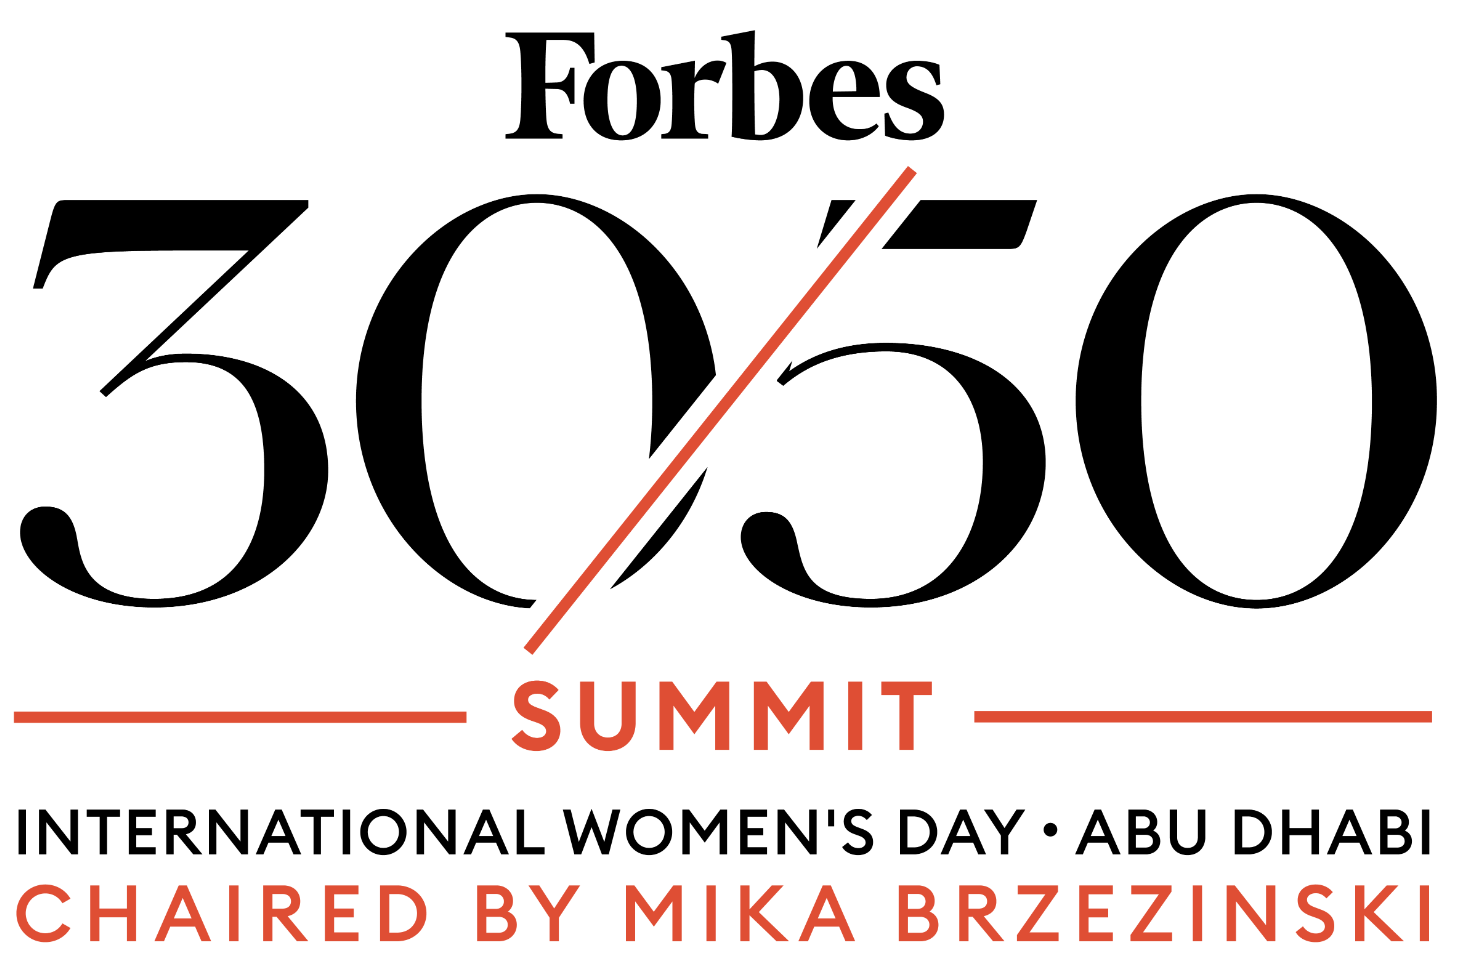 The Forbes 30/50 Summit Abu Dhabi